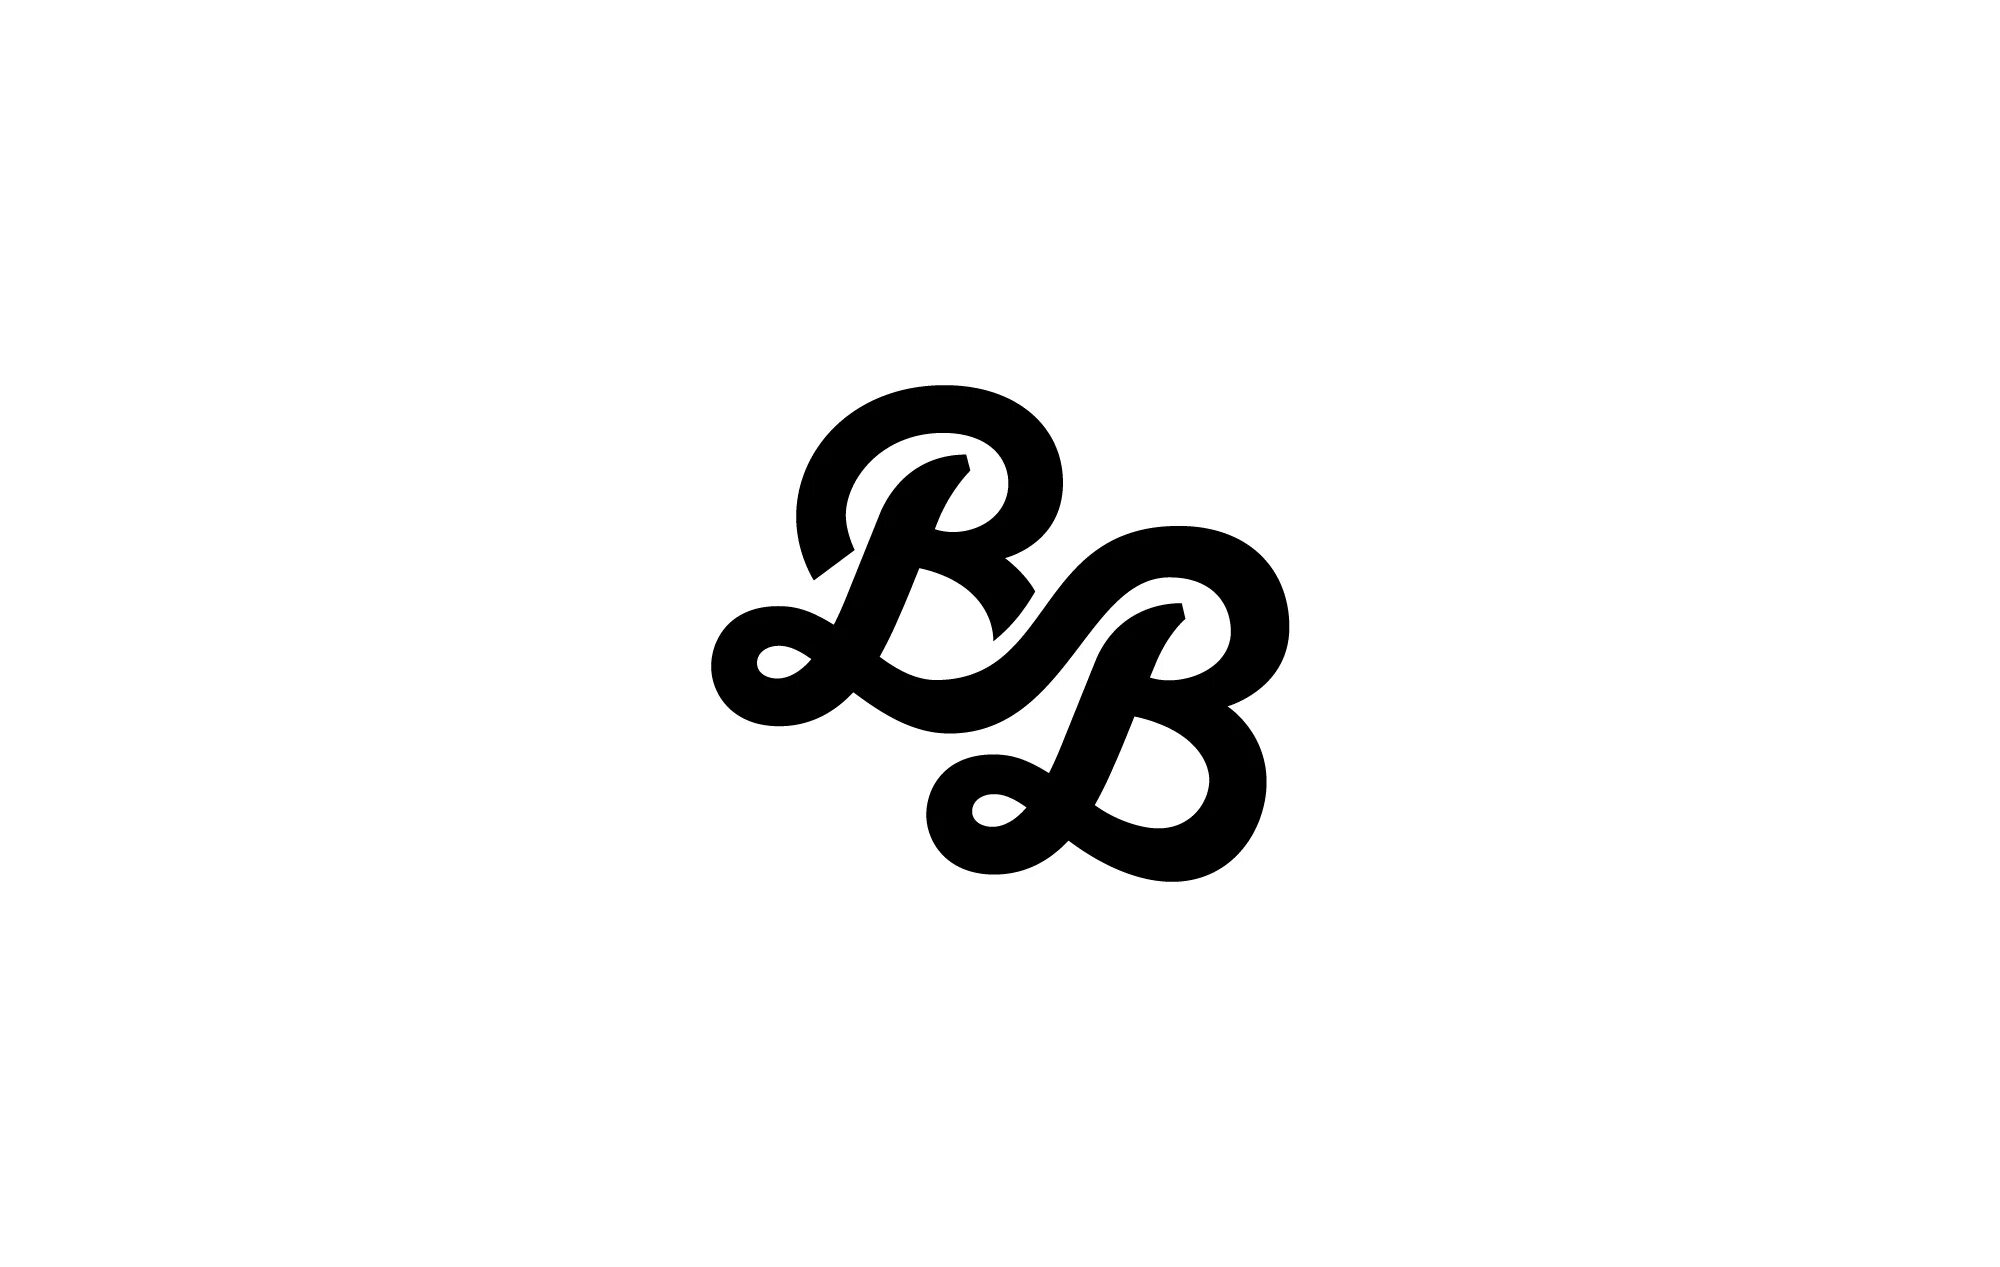 Логотип ВВ. Логотип с буквами ВВ. BB логотип бренда. Две буквы ВВ. Бб б б бю б